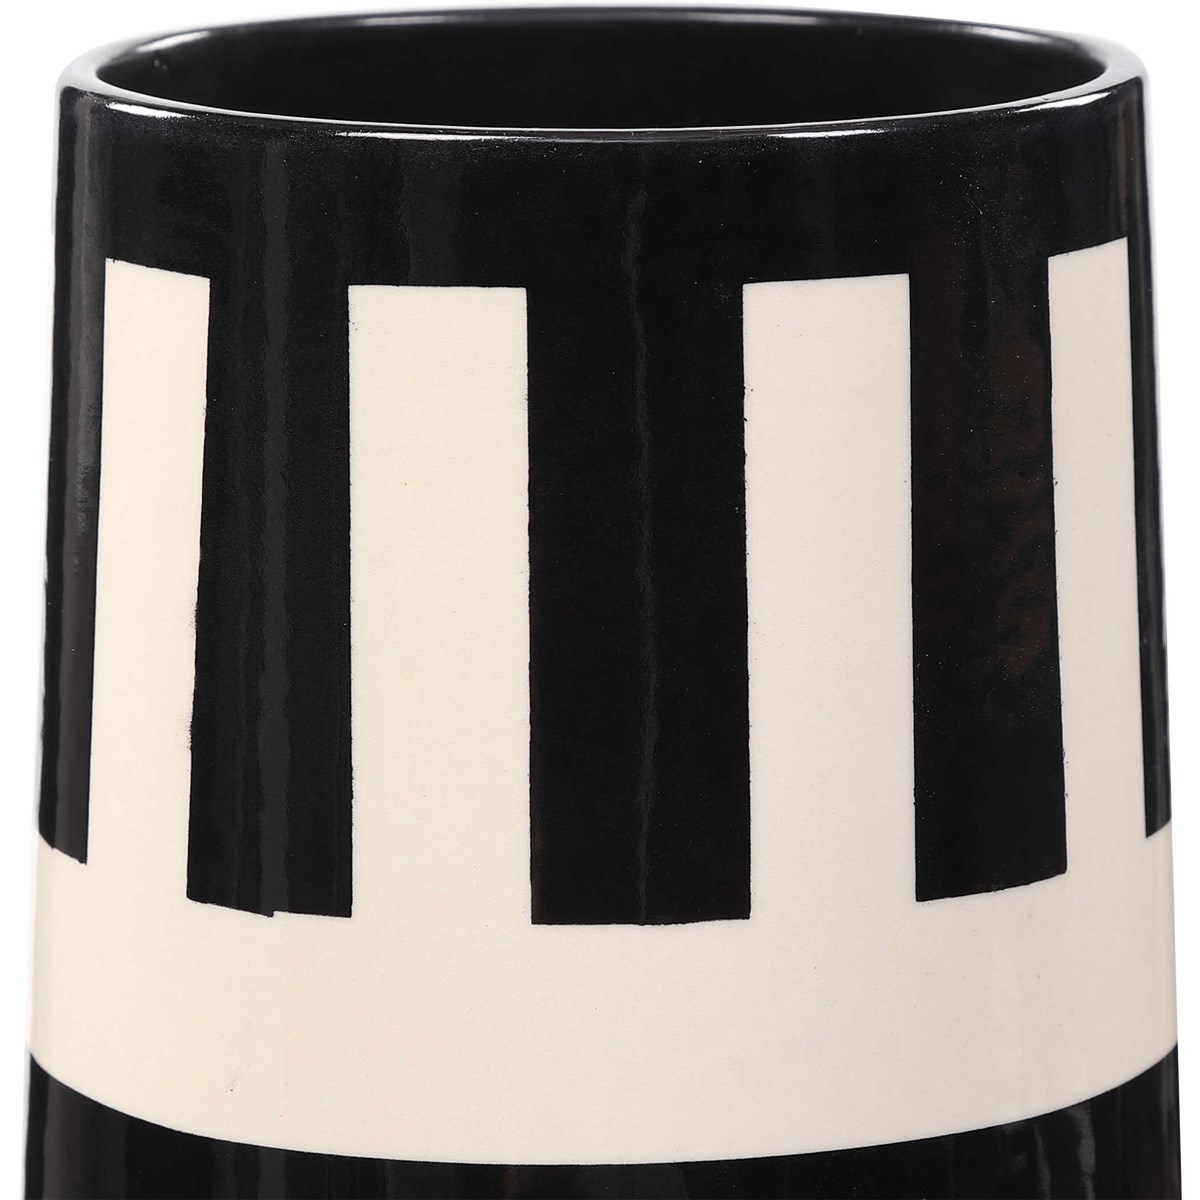 Amhara Vases, Black & White, Set of 2 - Image 3